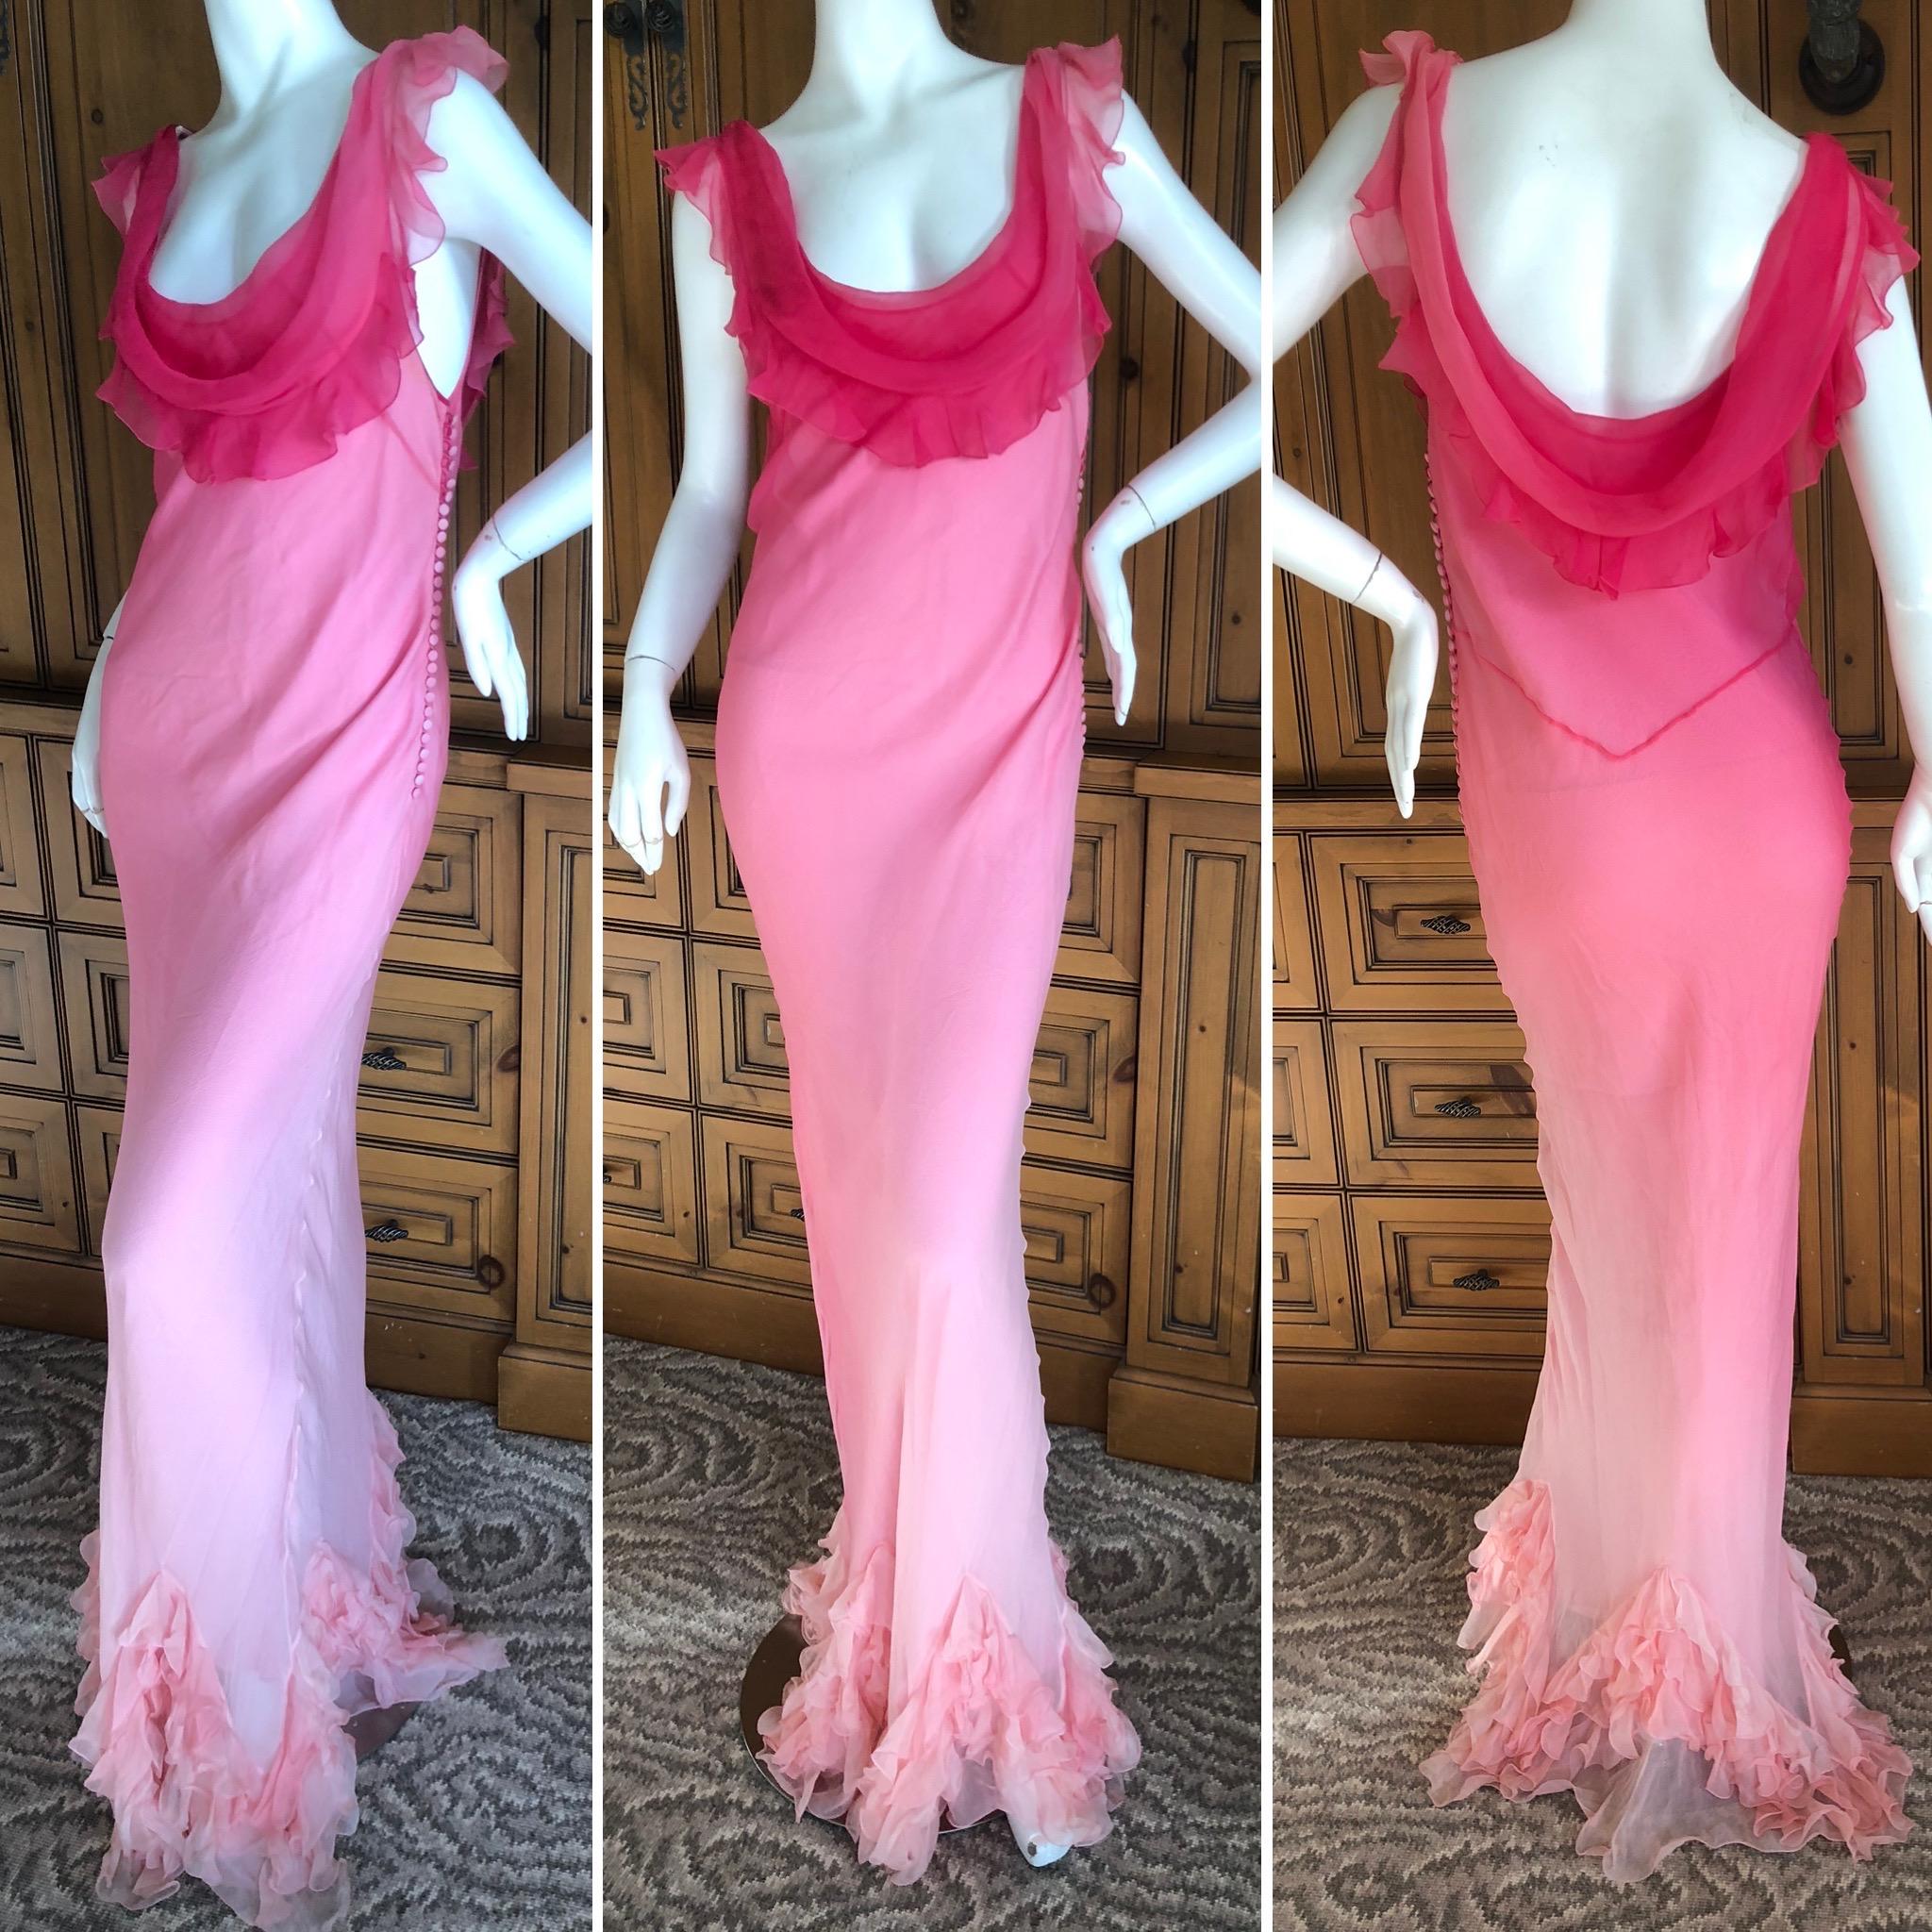 Christian Dior by John Galliano Bias Cut Ombre Silk Chiffon Evening Dress with Flamenco Ruffled Hem

Size 38

Bust 36